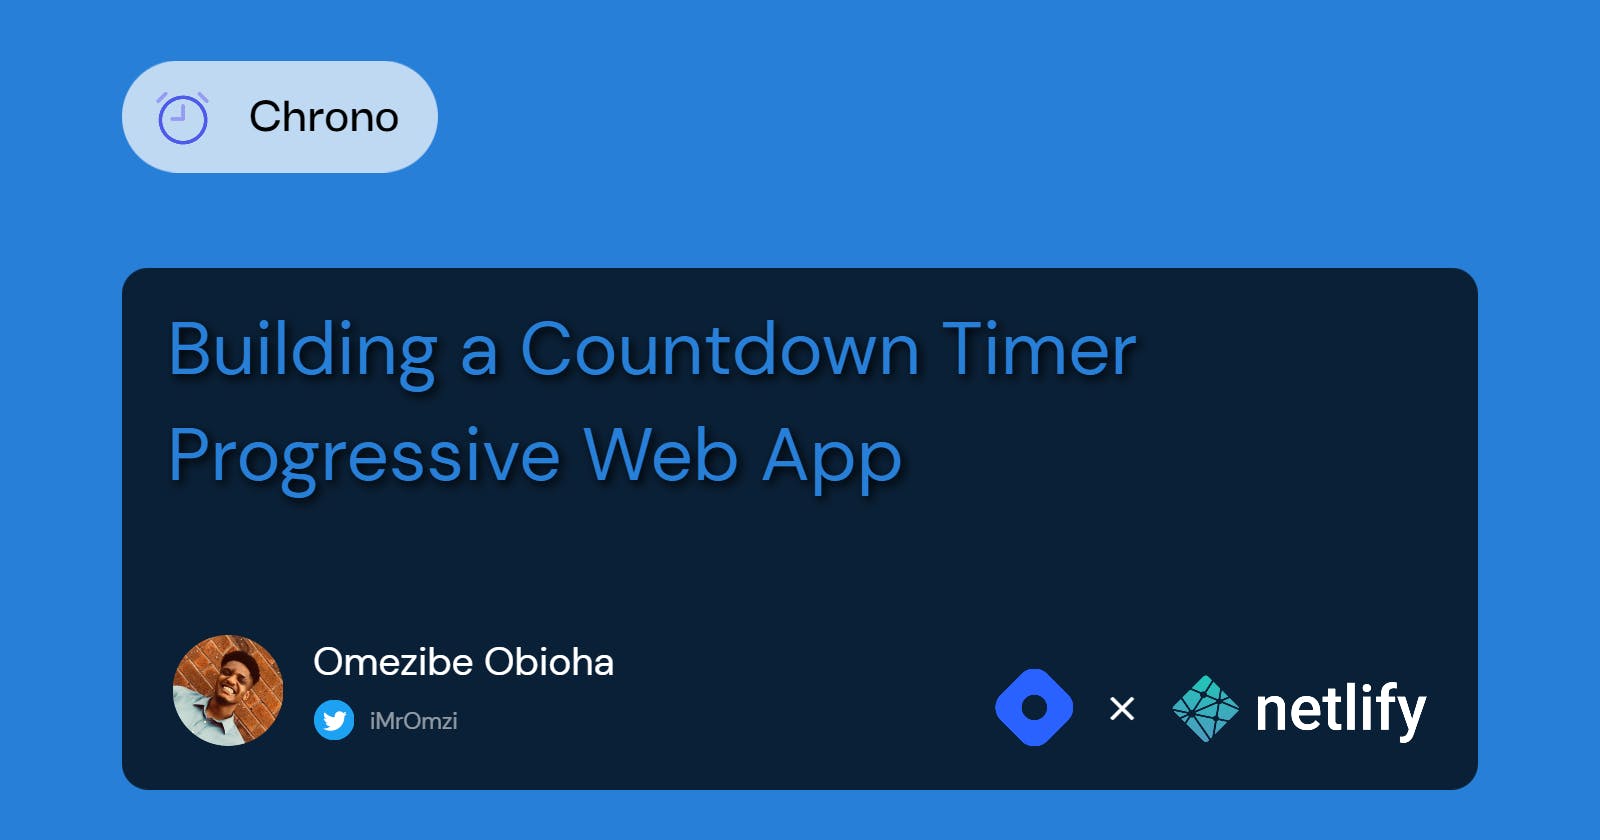 Chrono: Building a Countdown Timer Progressive Web App